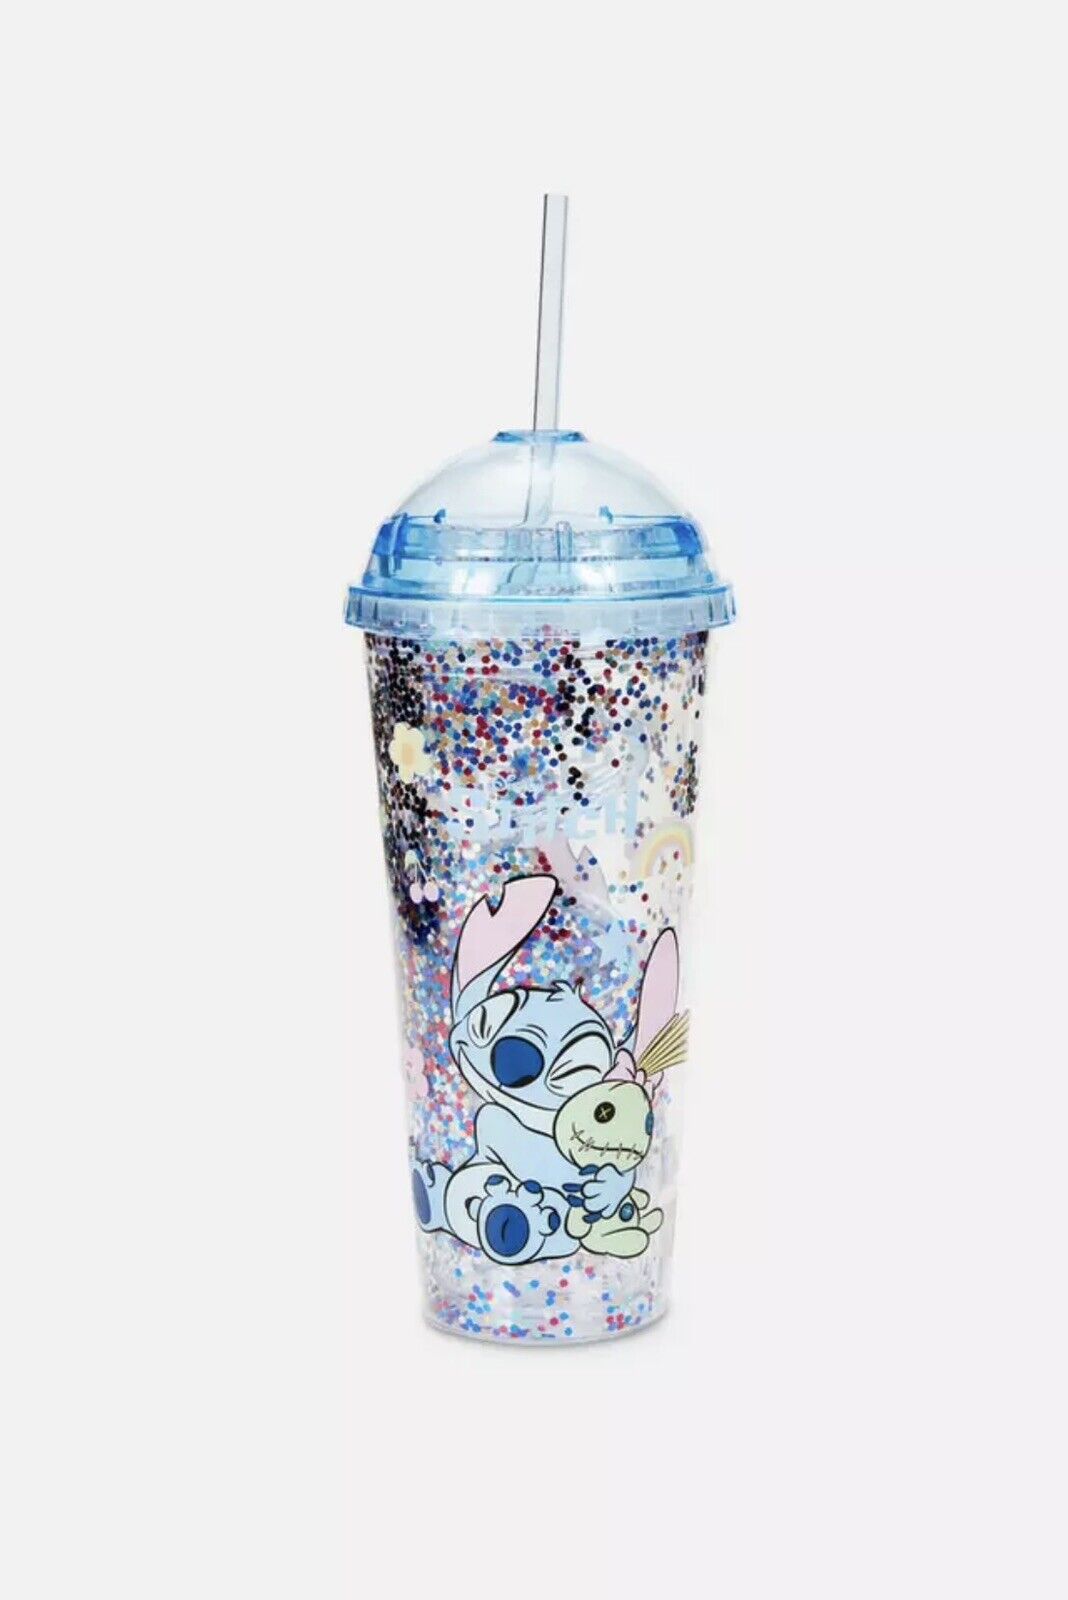 *LIMITED* Disney Stitch Glitter Sparkle Tumbler Cup